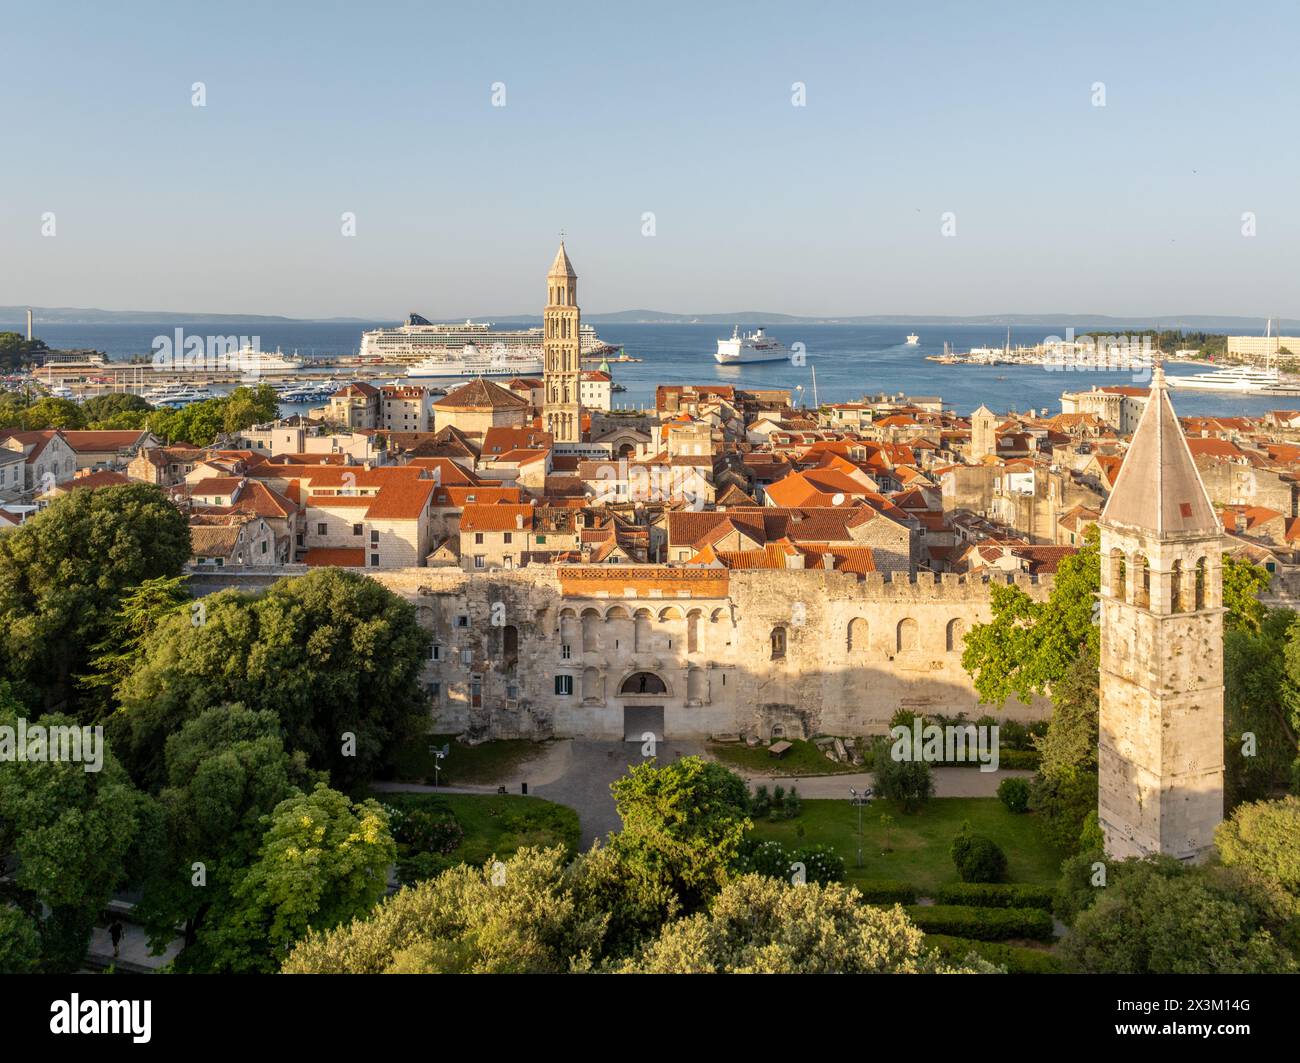 Das Goldene Tor der Altstadt von Split, Kroatien. Stockfoto